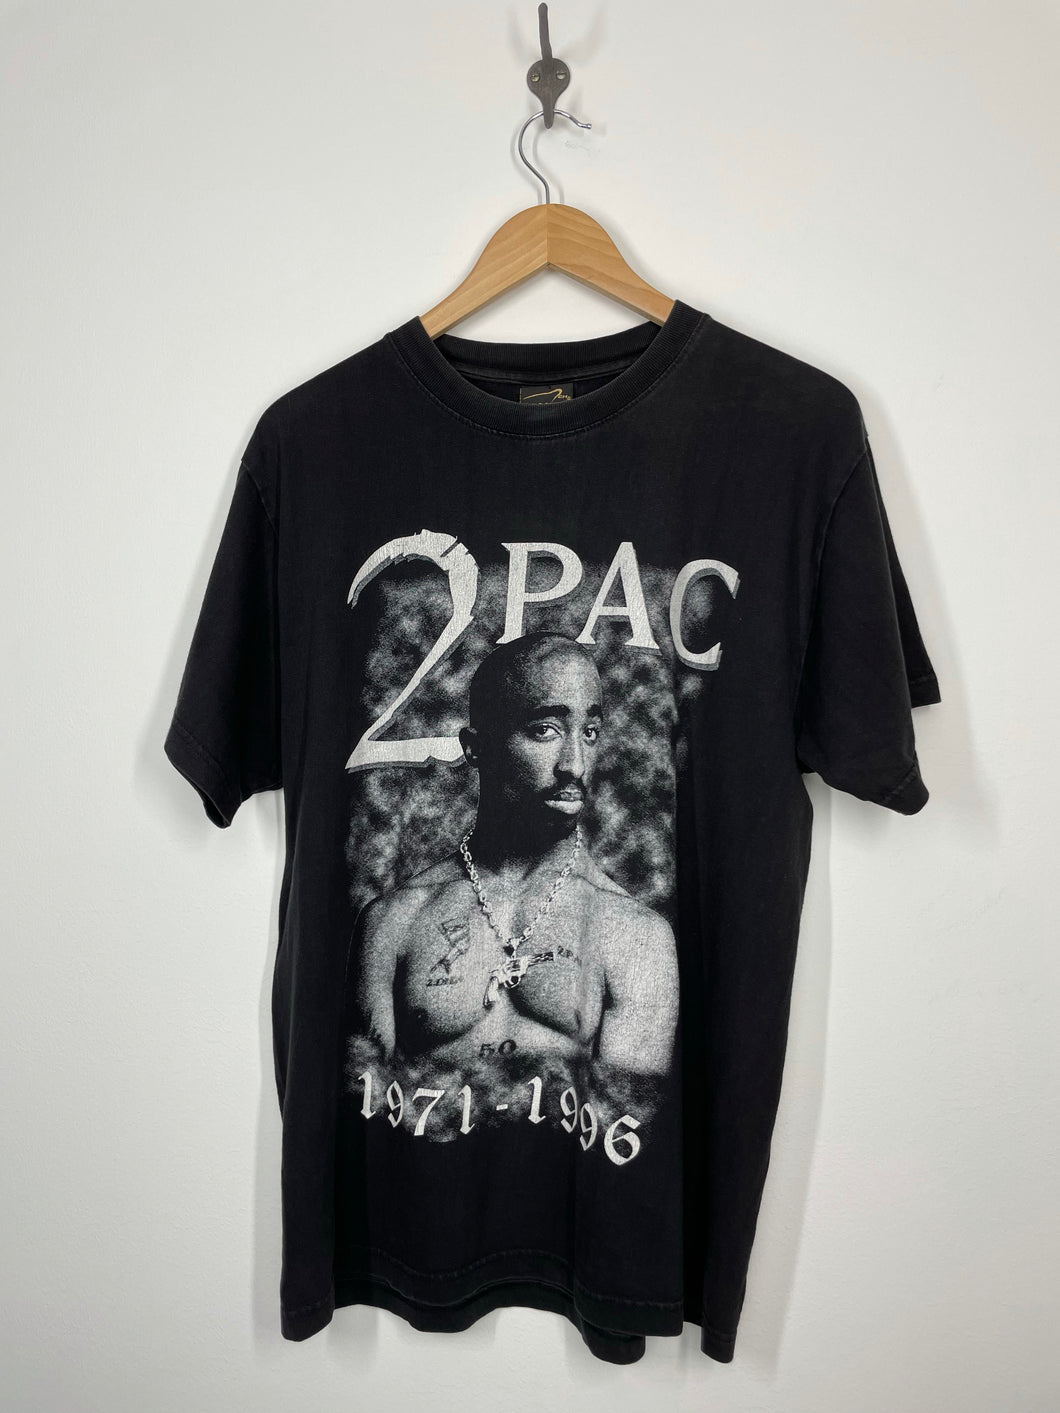 2Pac Shakur 1971 - 1996 Rap T Shirt - Gold Series - M